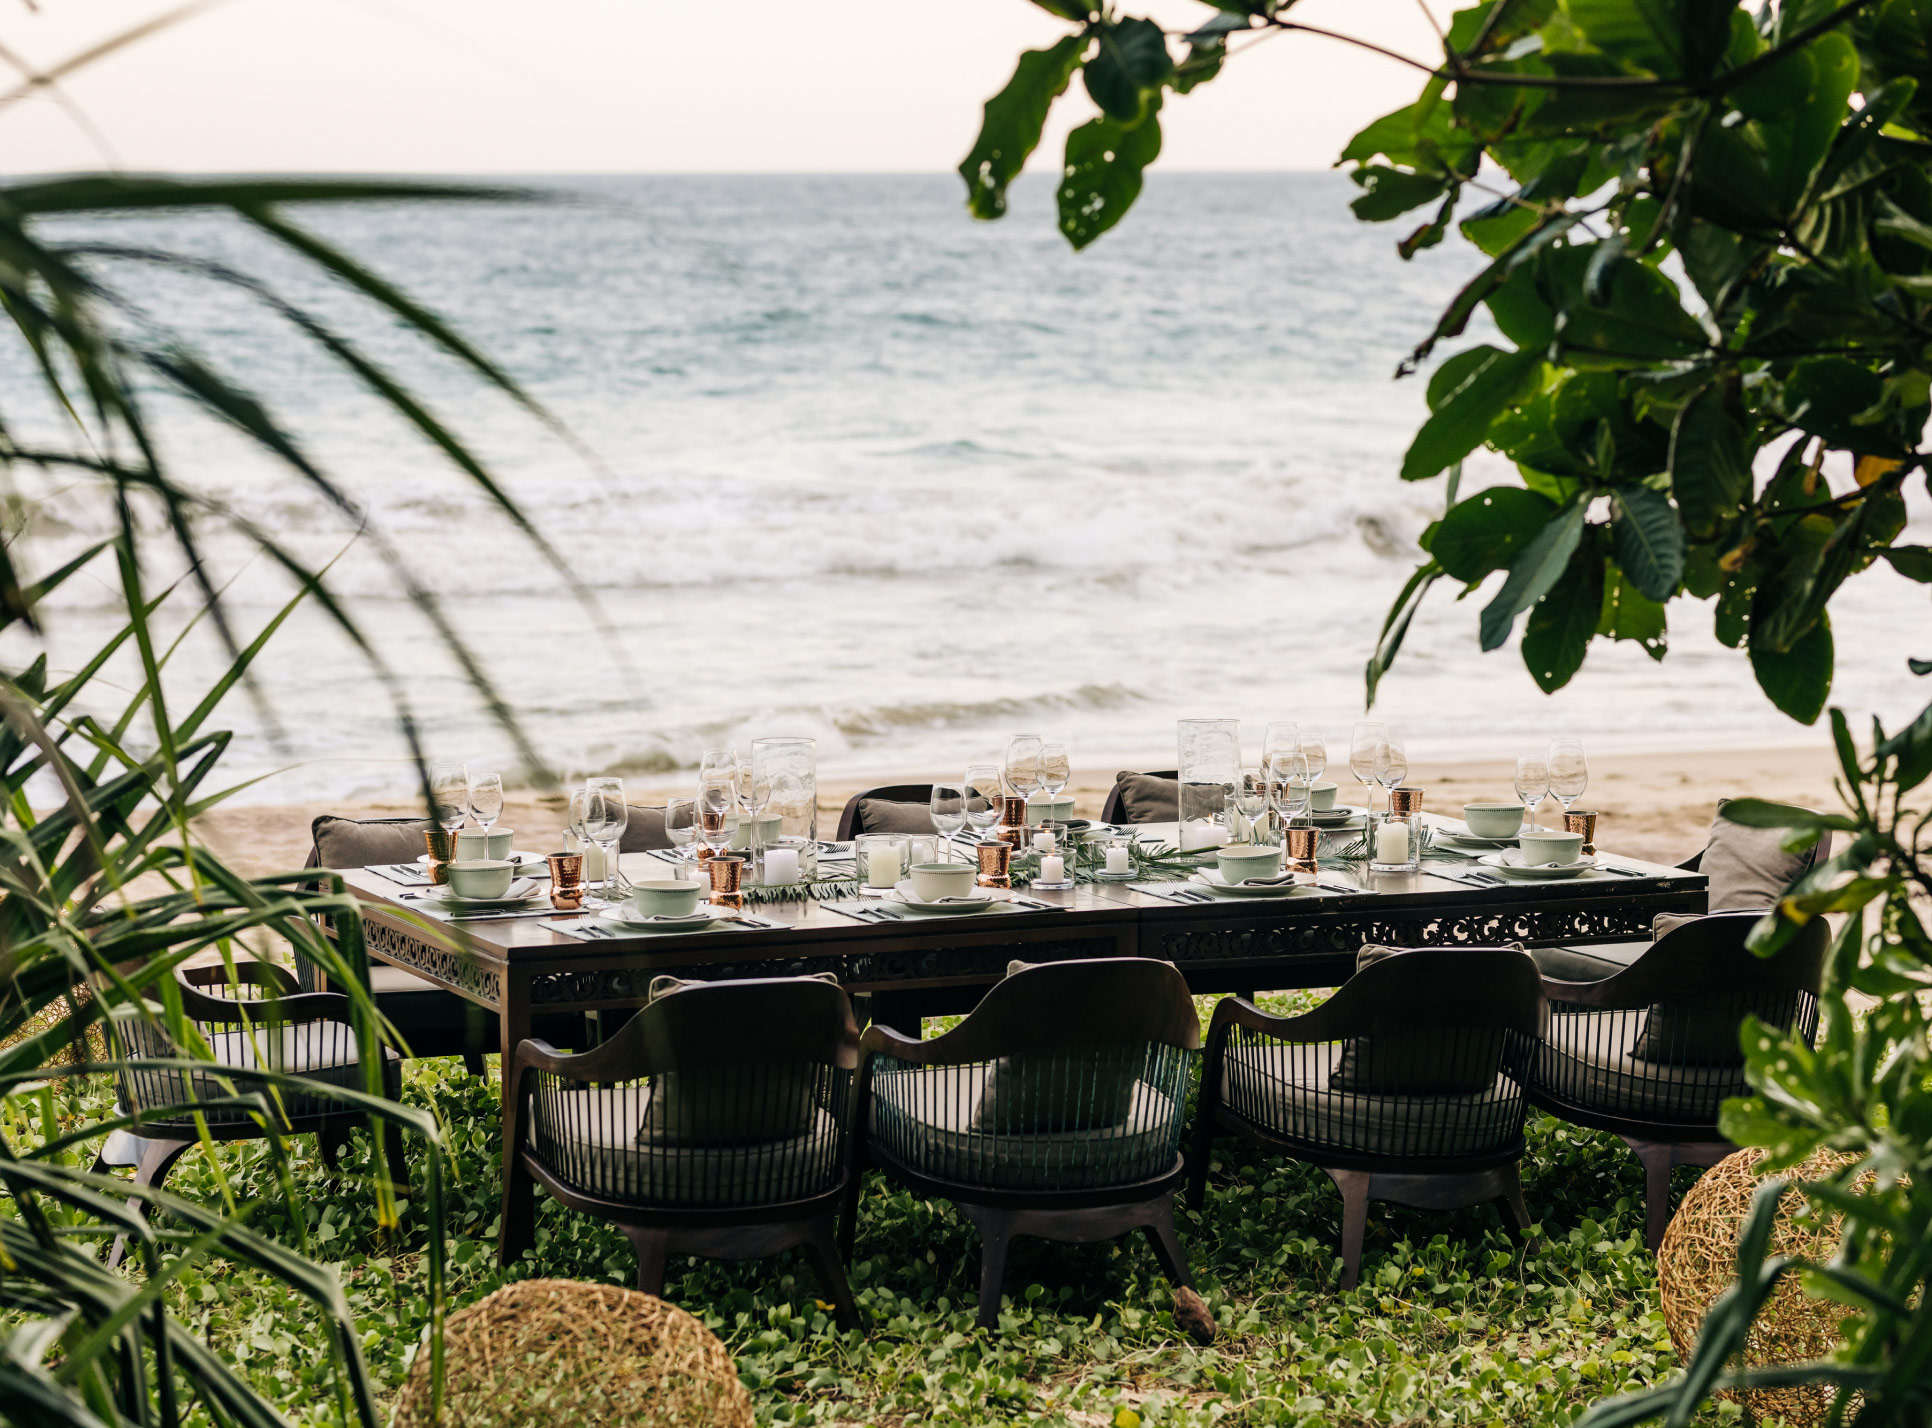 Ani-Sri-Lanka_Dining_Beach_Dinner